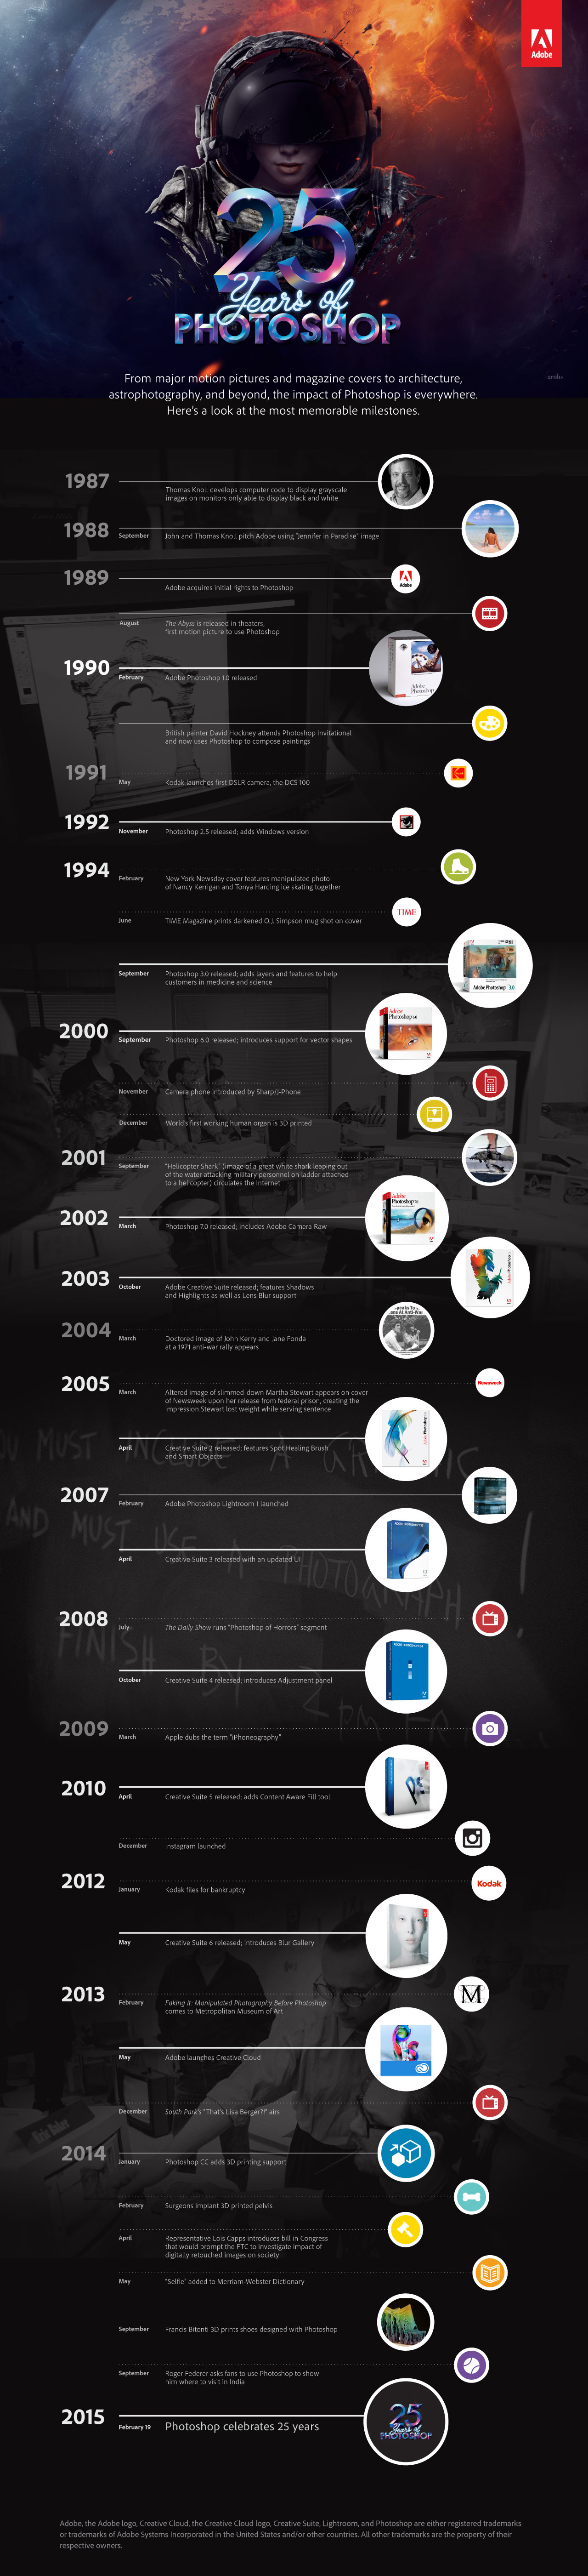 Photoshop 25th Anniversary Timeline